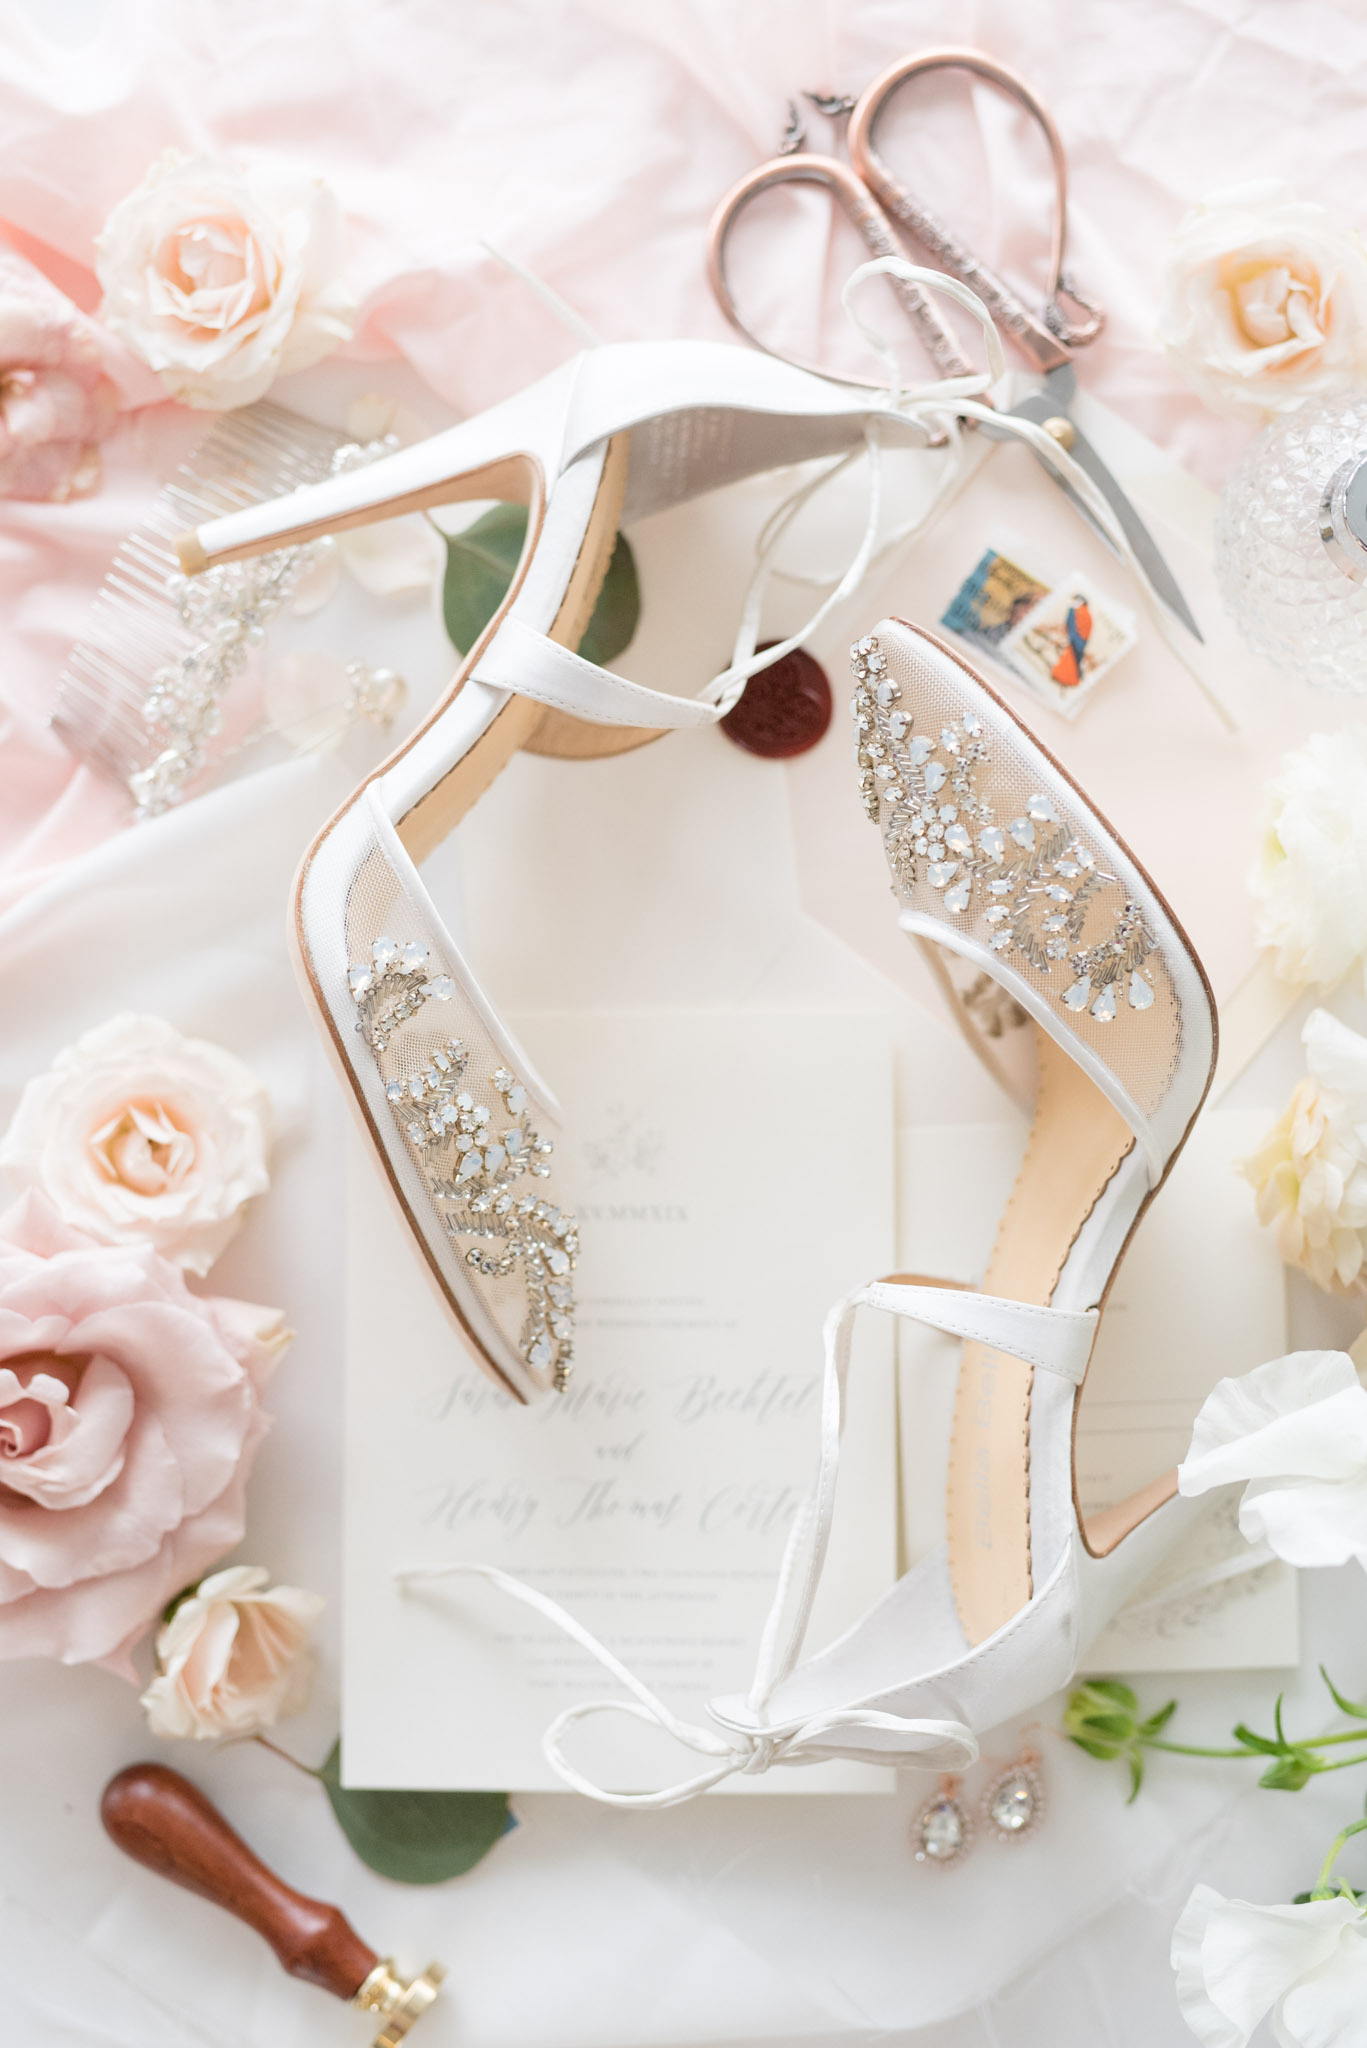 Wedding heels sit with wedding invitations.